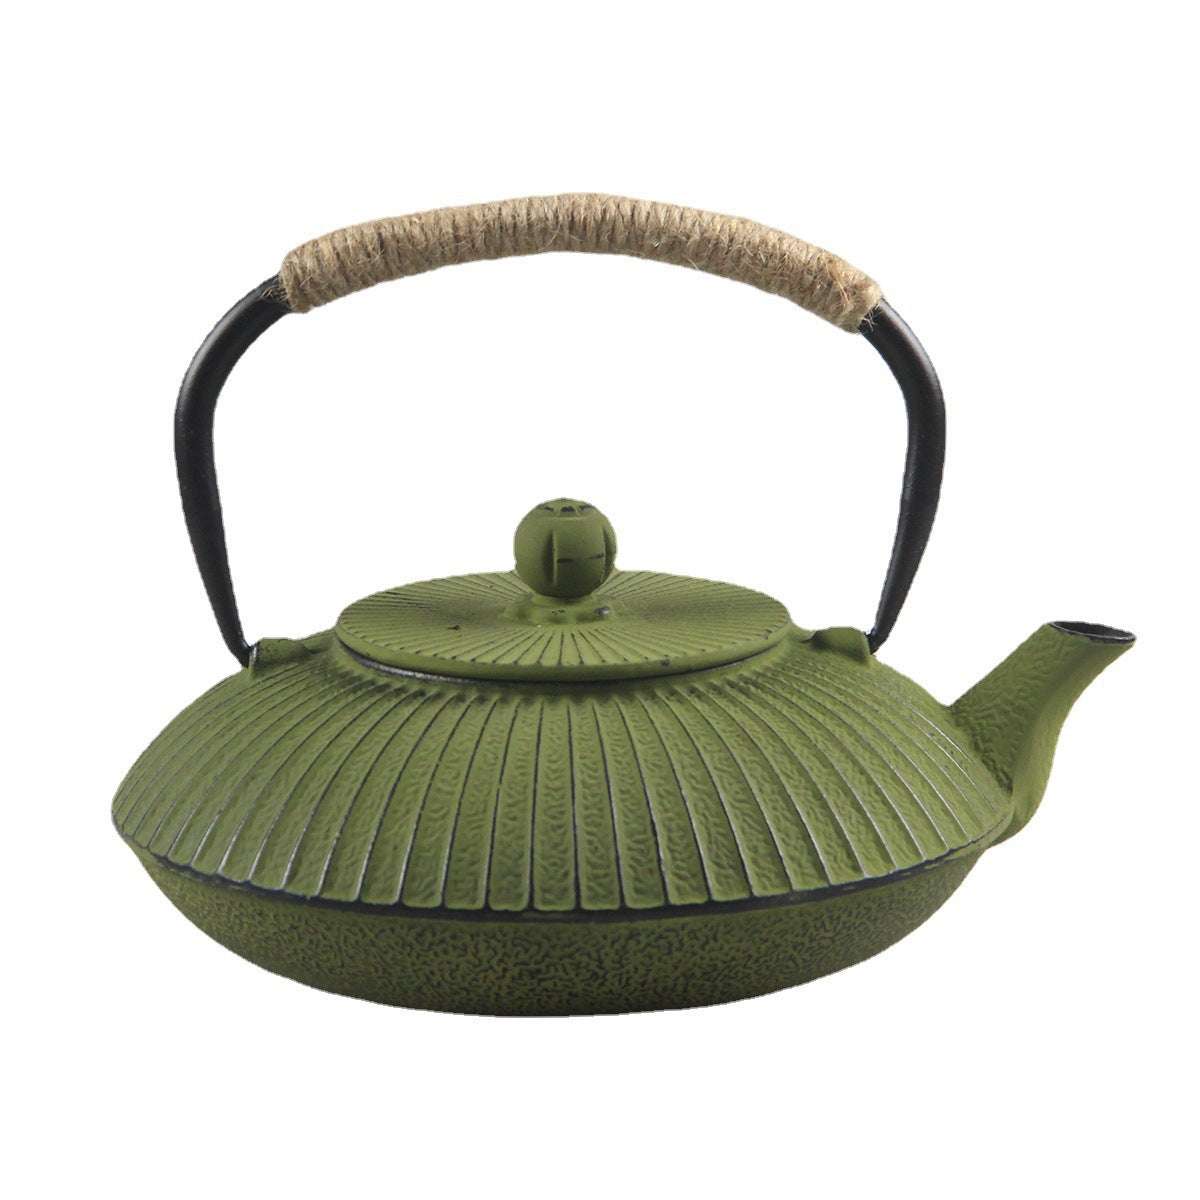 The Kaigara Japanese Style Cast Iron Teapot